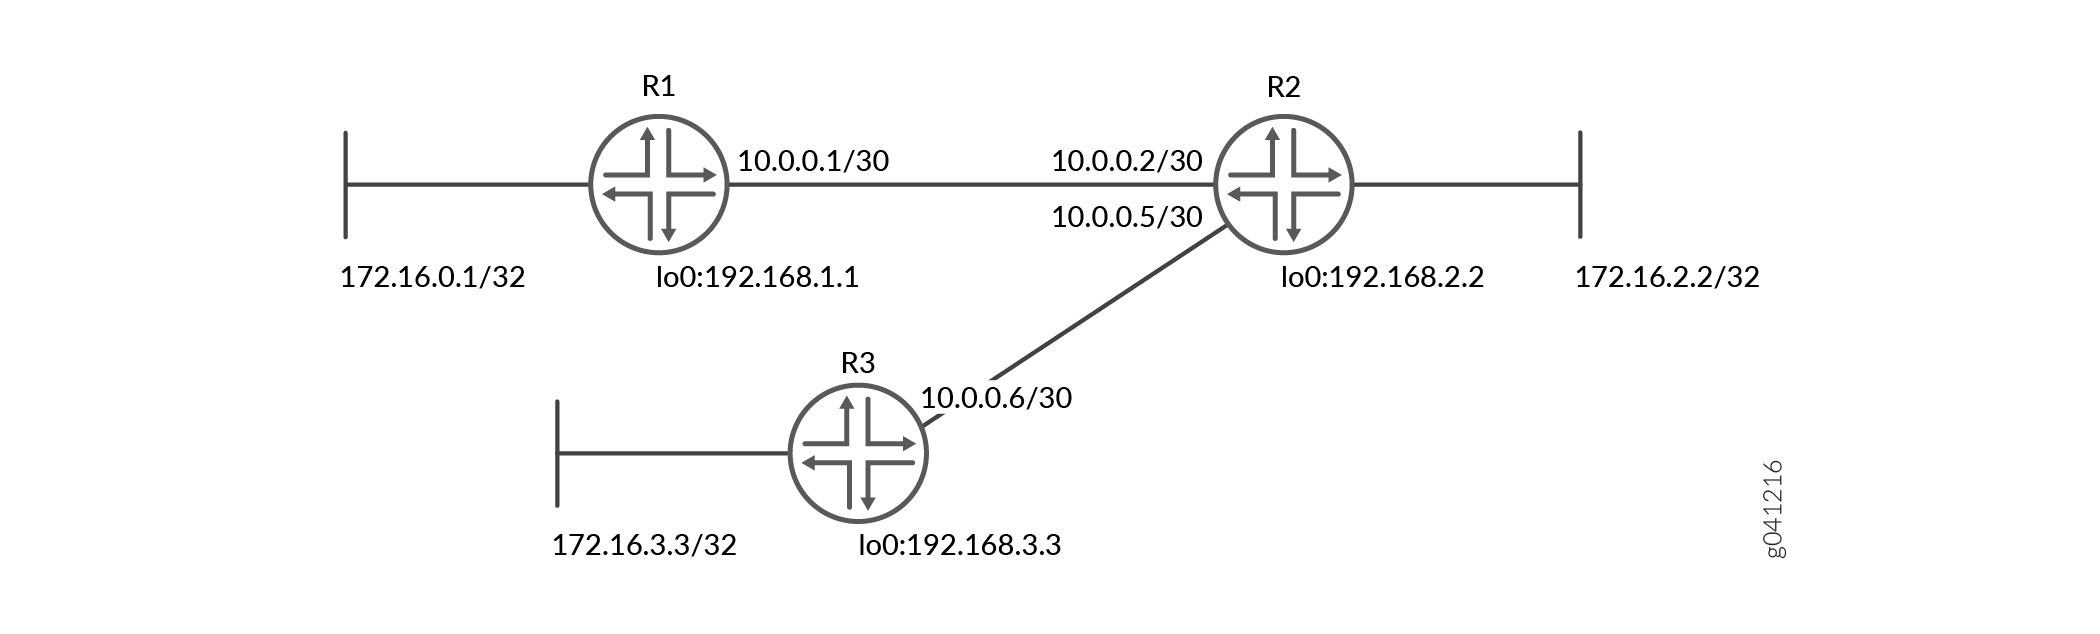 Sample RIP Network Topology